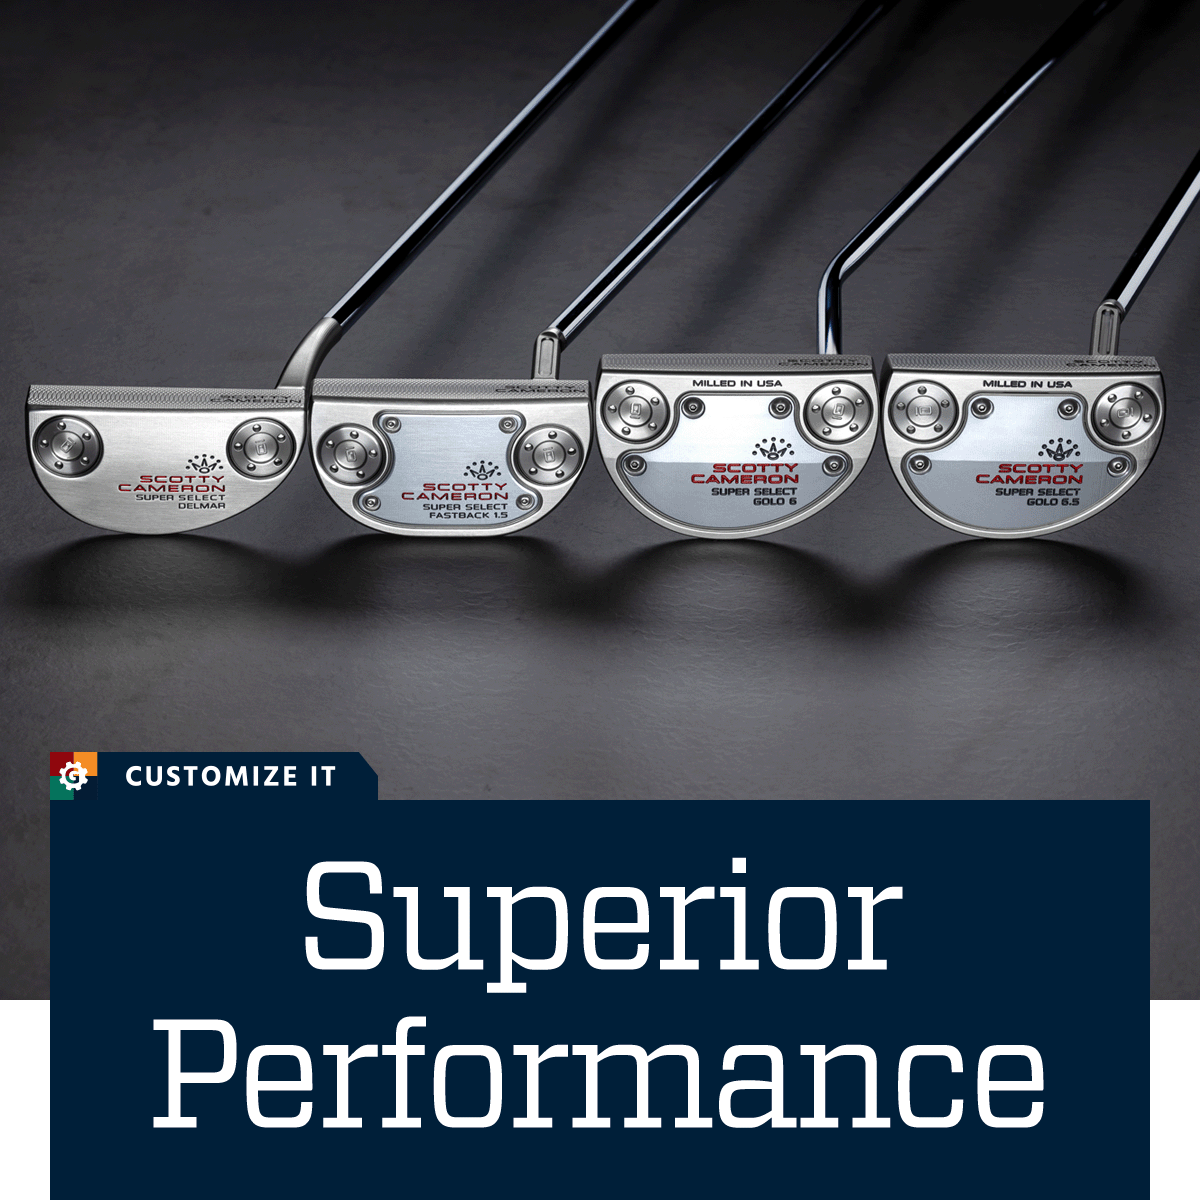  Superior performance. Customize it.